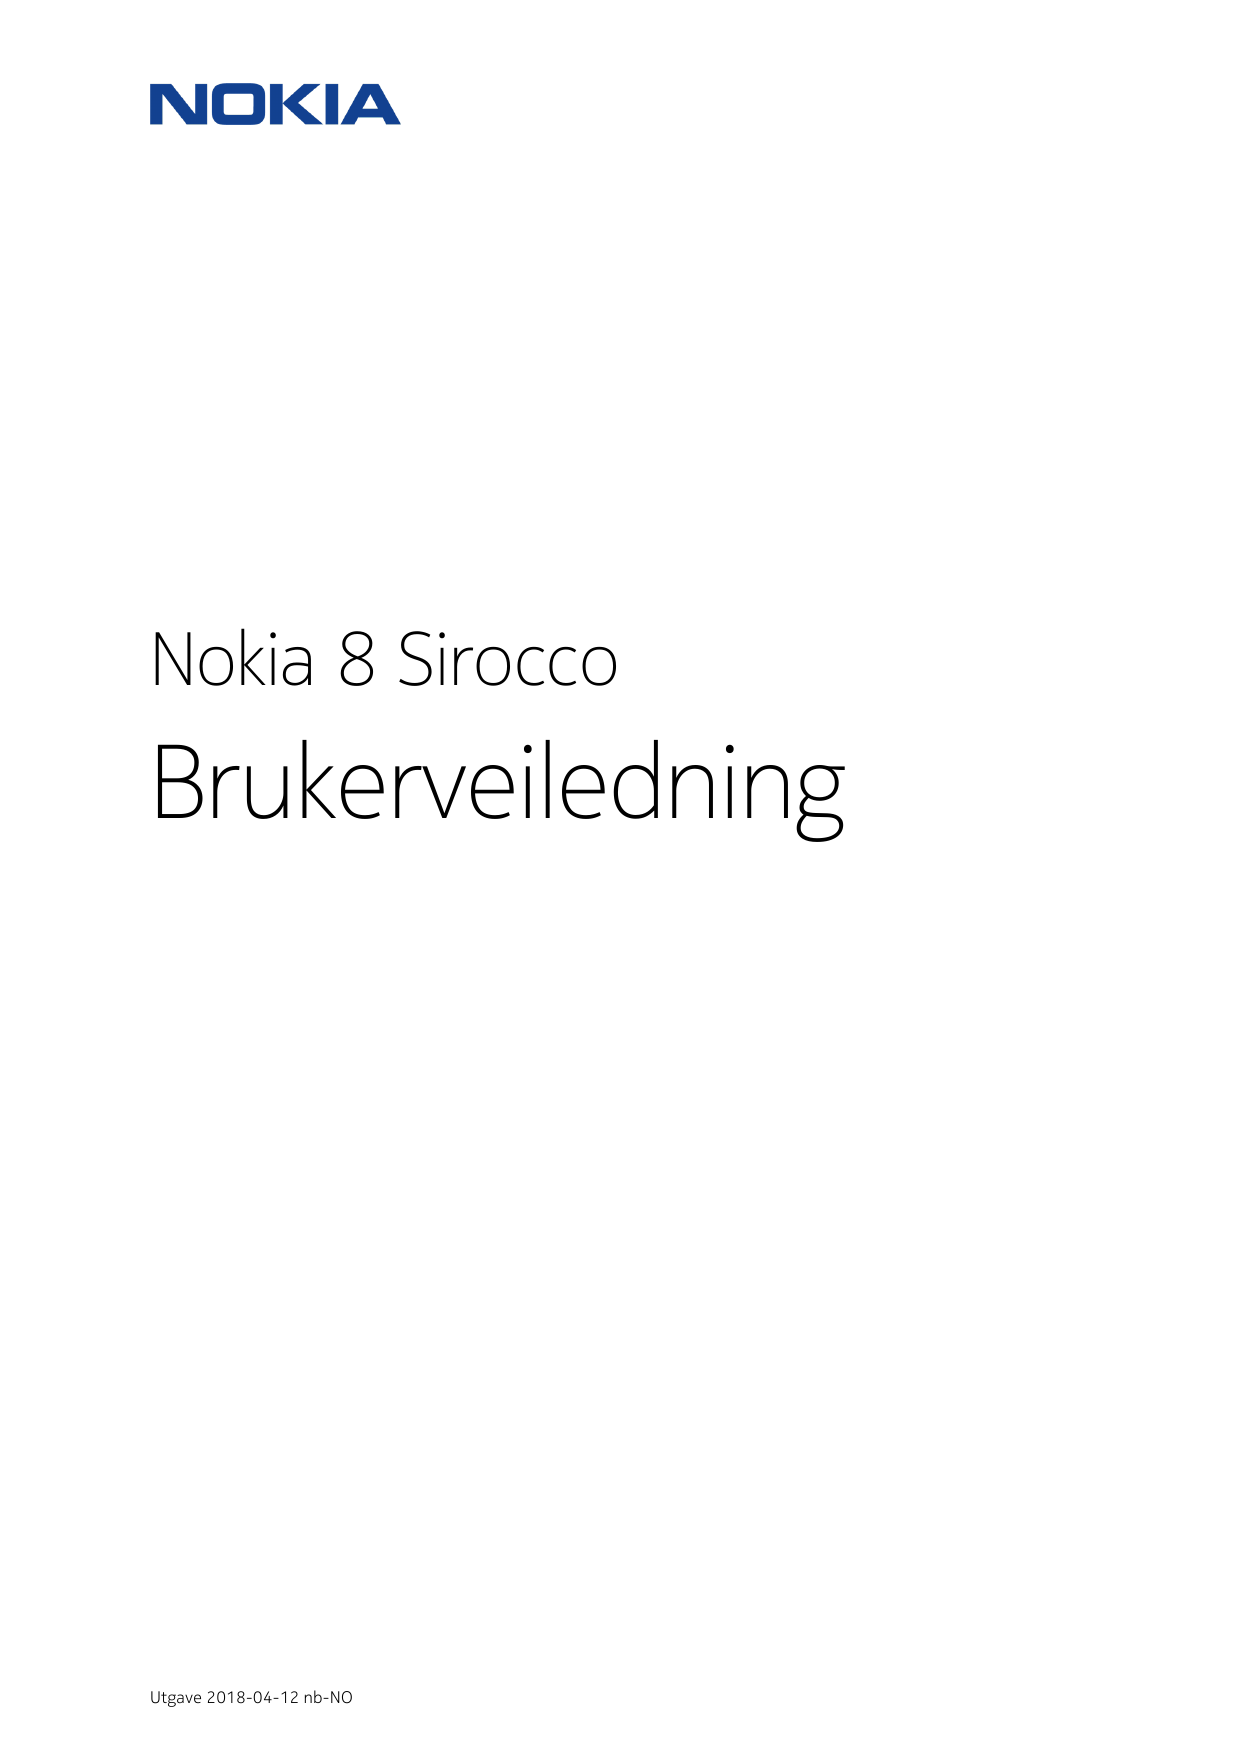 Nokia 8 SiroccoBrukerveiledningUtgave 2018-04-12 nb-NO